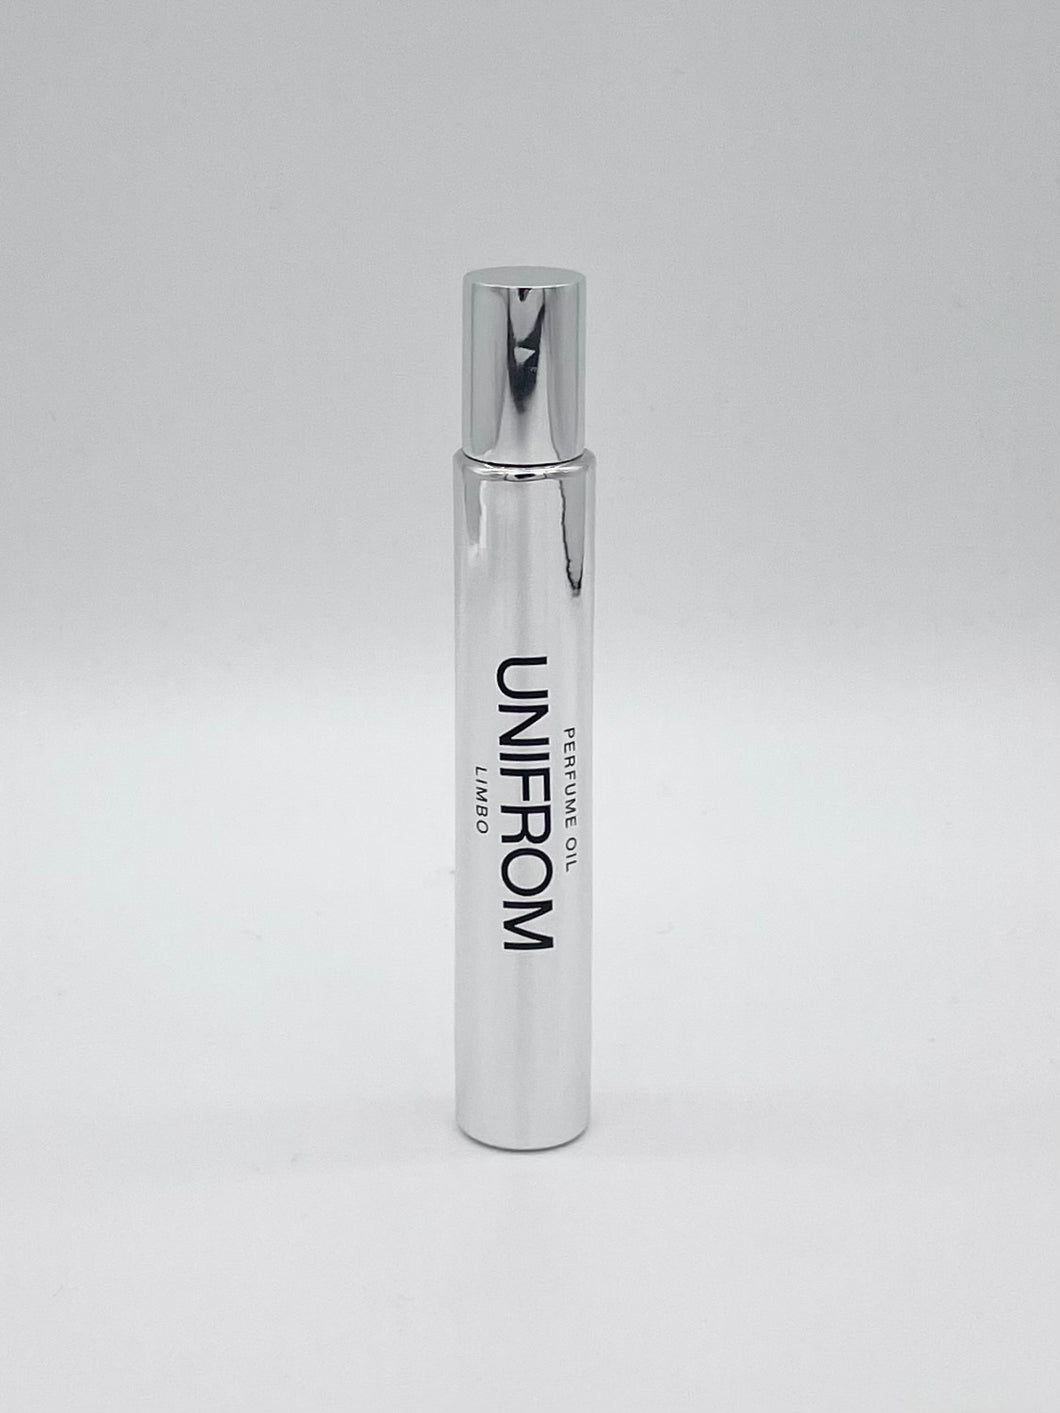 Unifrom - Limbo perfume oil